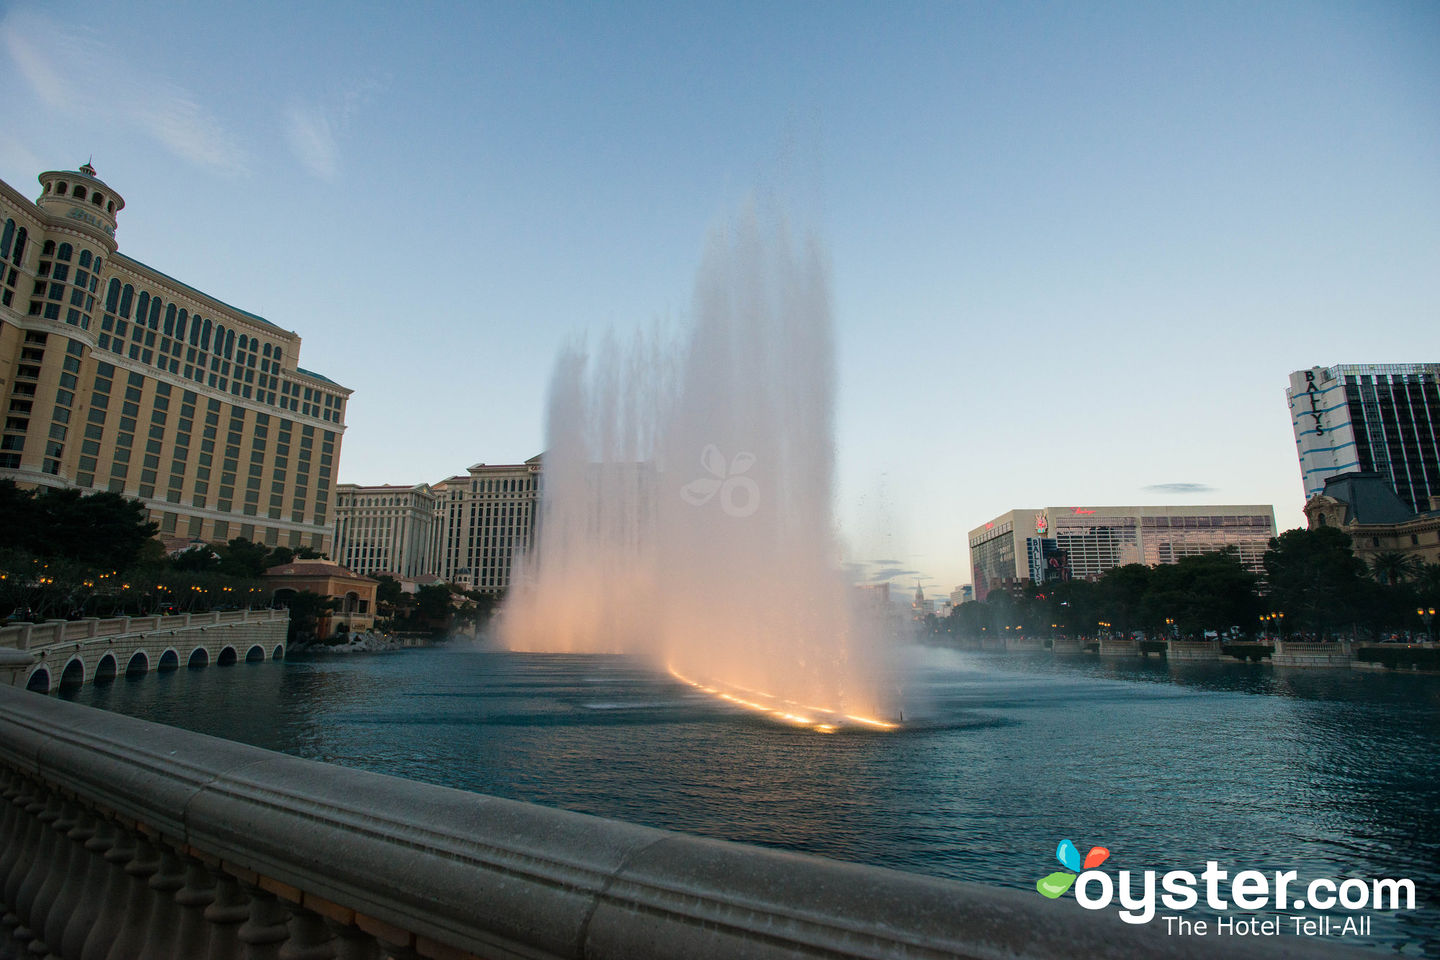 Bellagio Hotel fountains, Las Vegas, Nevada